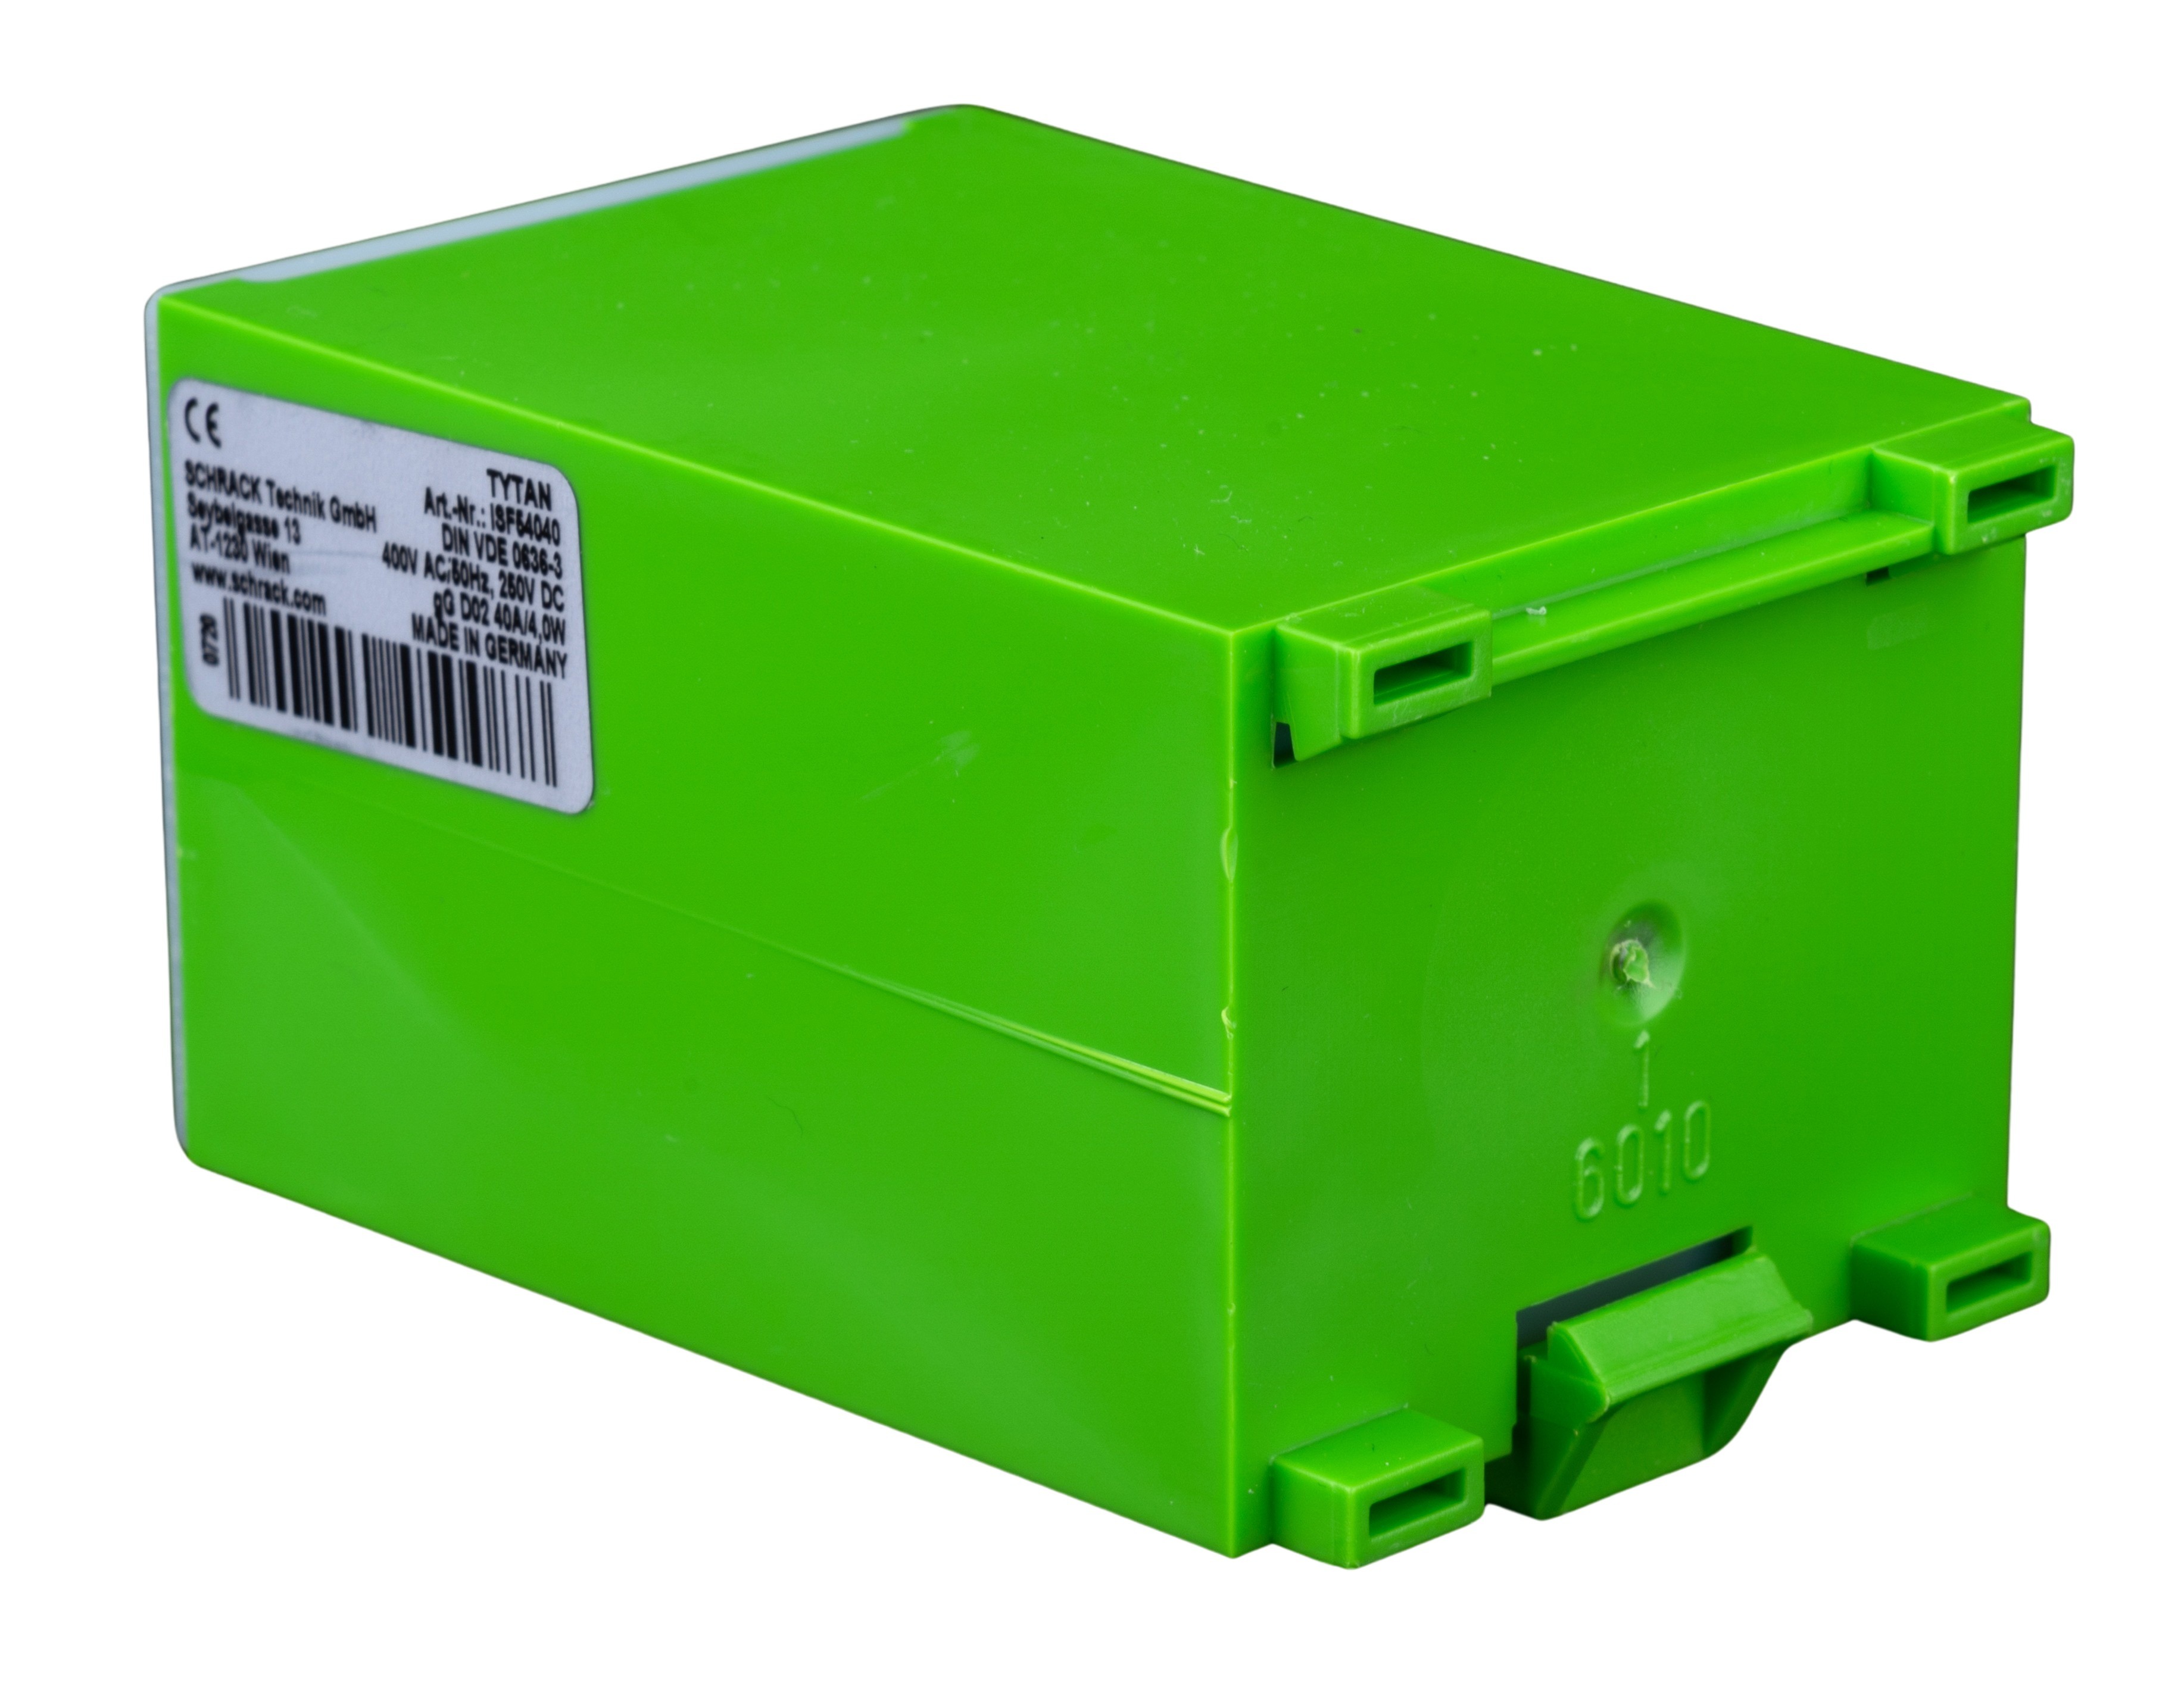 Servicebox mit 12 Sicherungseinsätzen D02 / 40A, grün